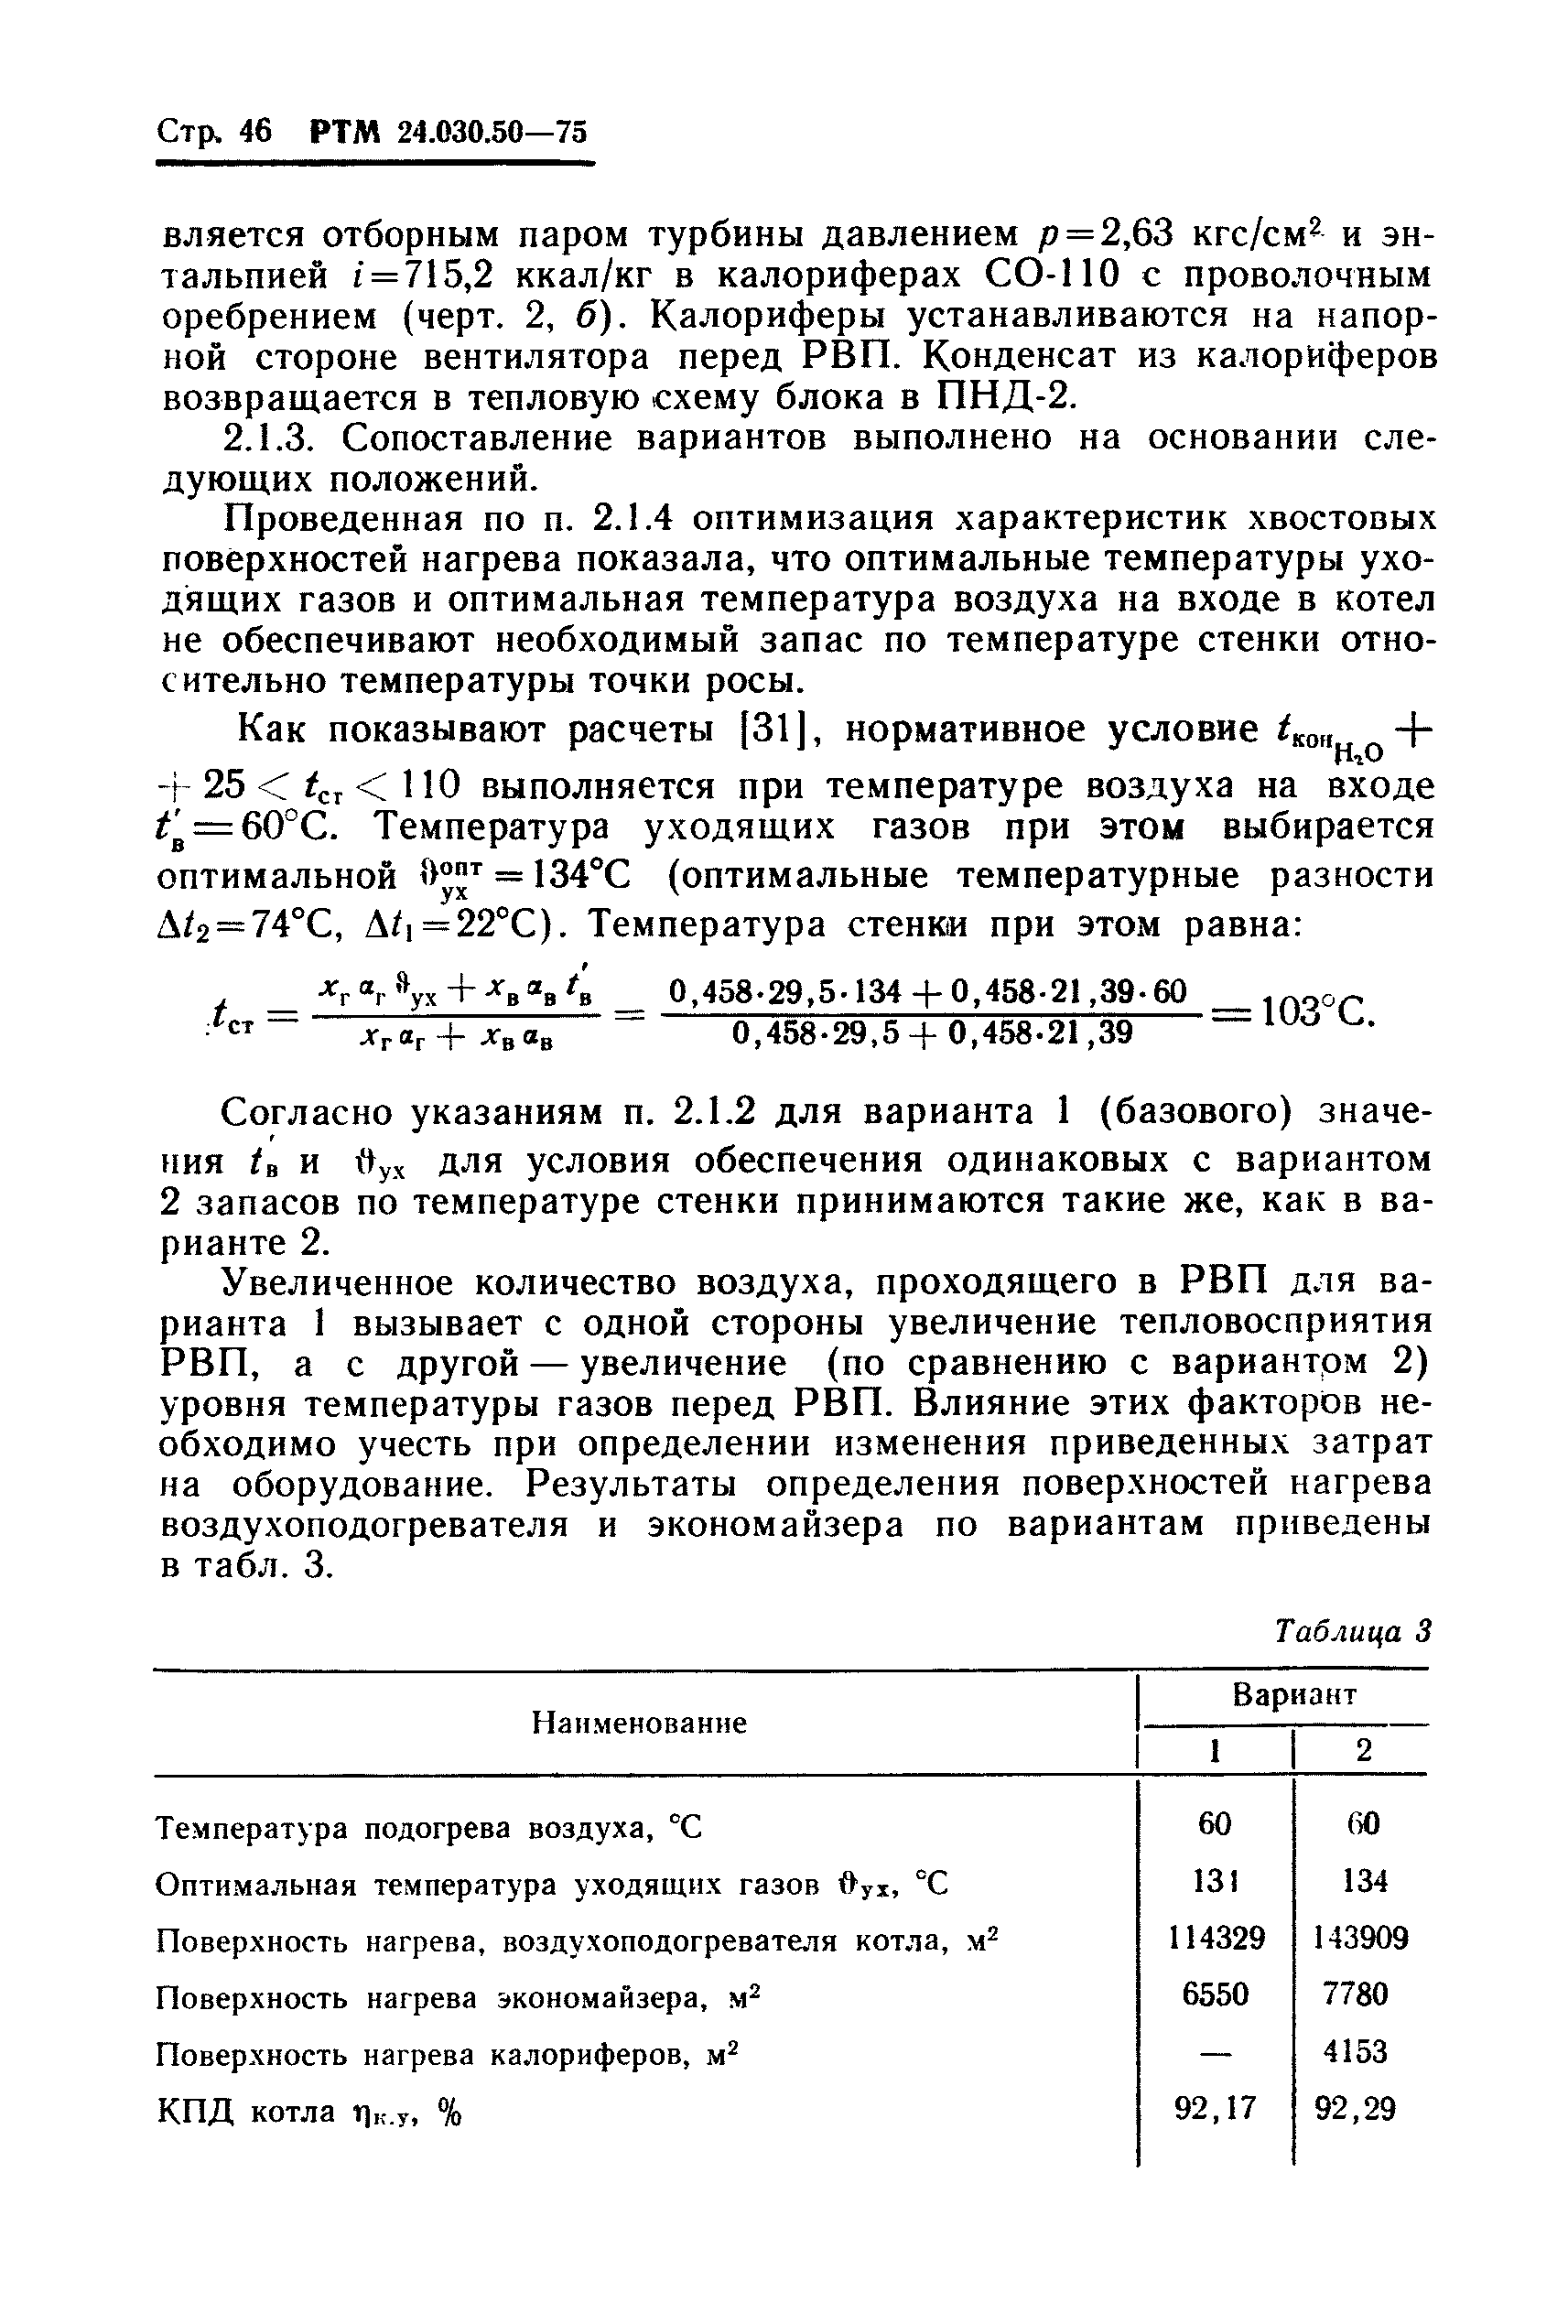 РТМ 24.030.50-75